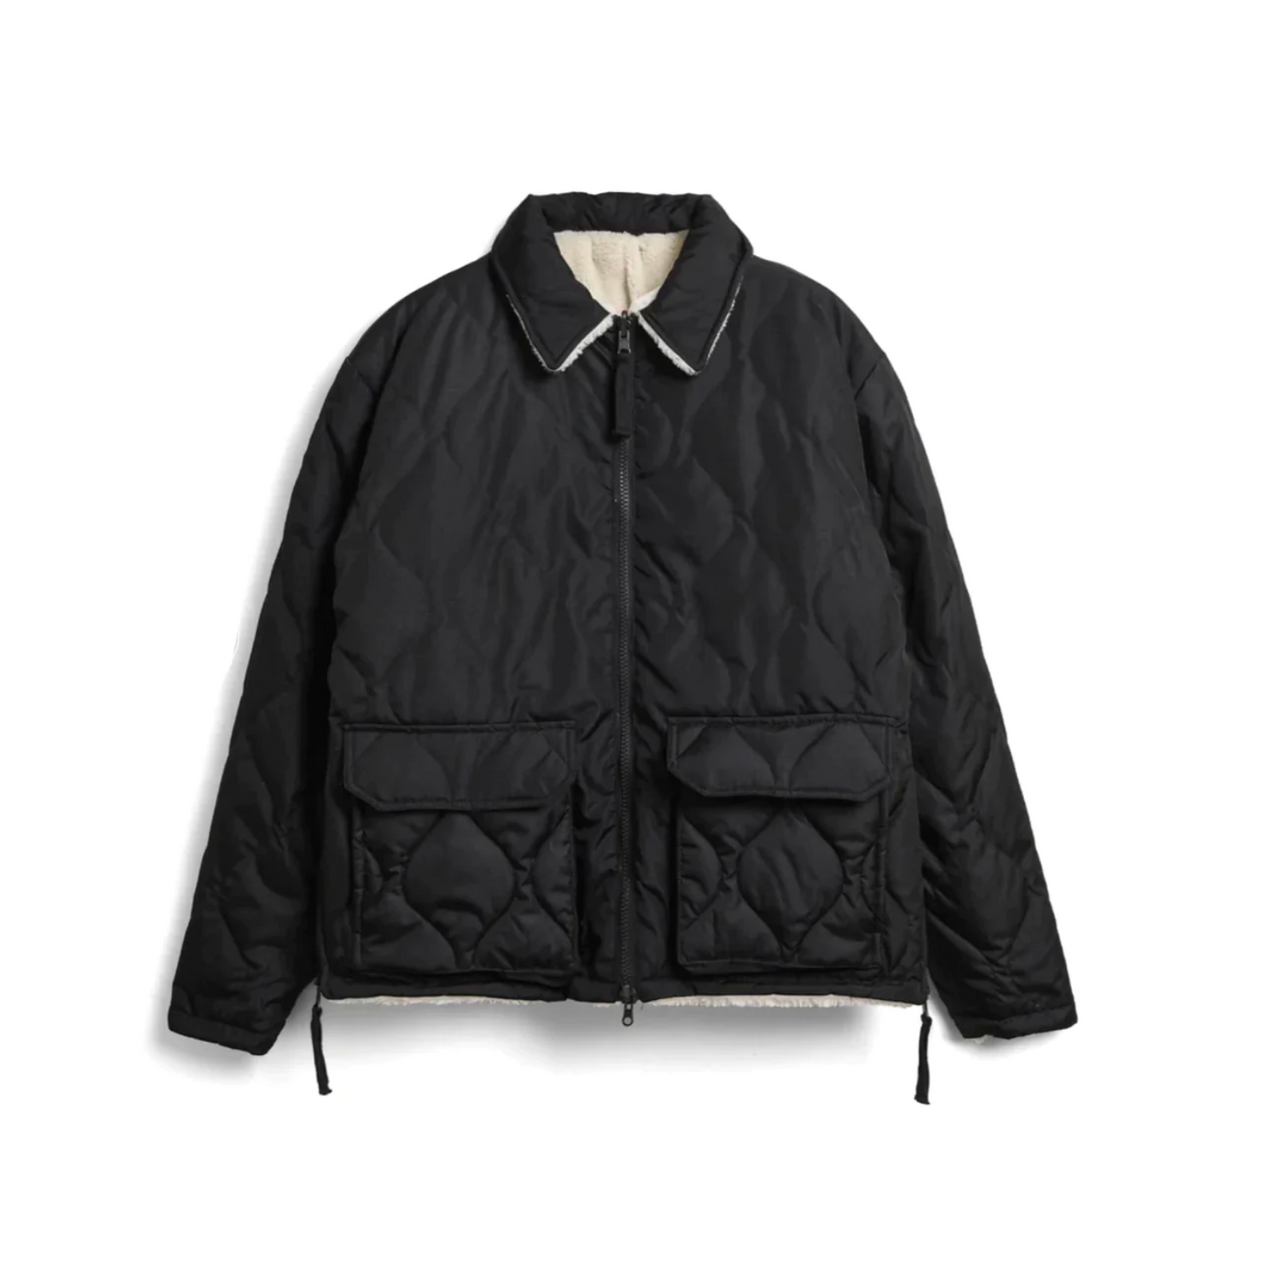 Drake General Store - TAION Military Reversible Down Jacket - Black/Cream